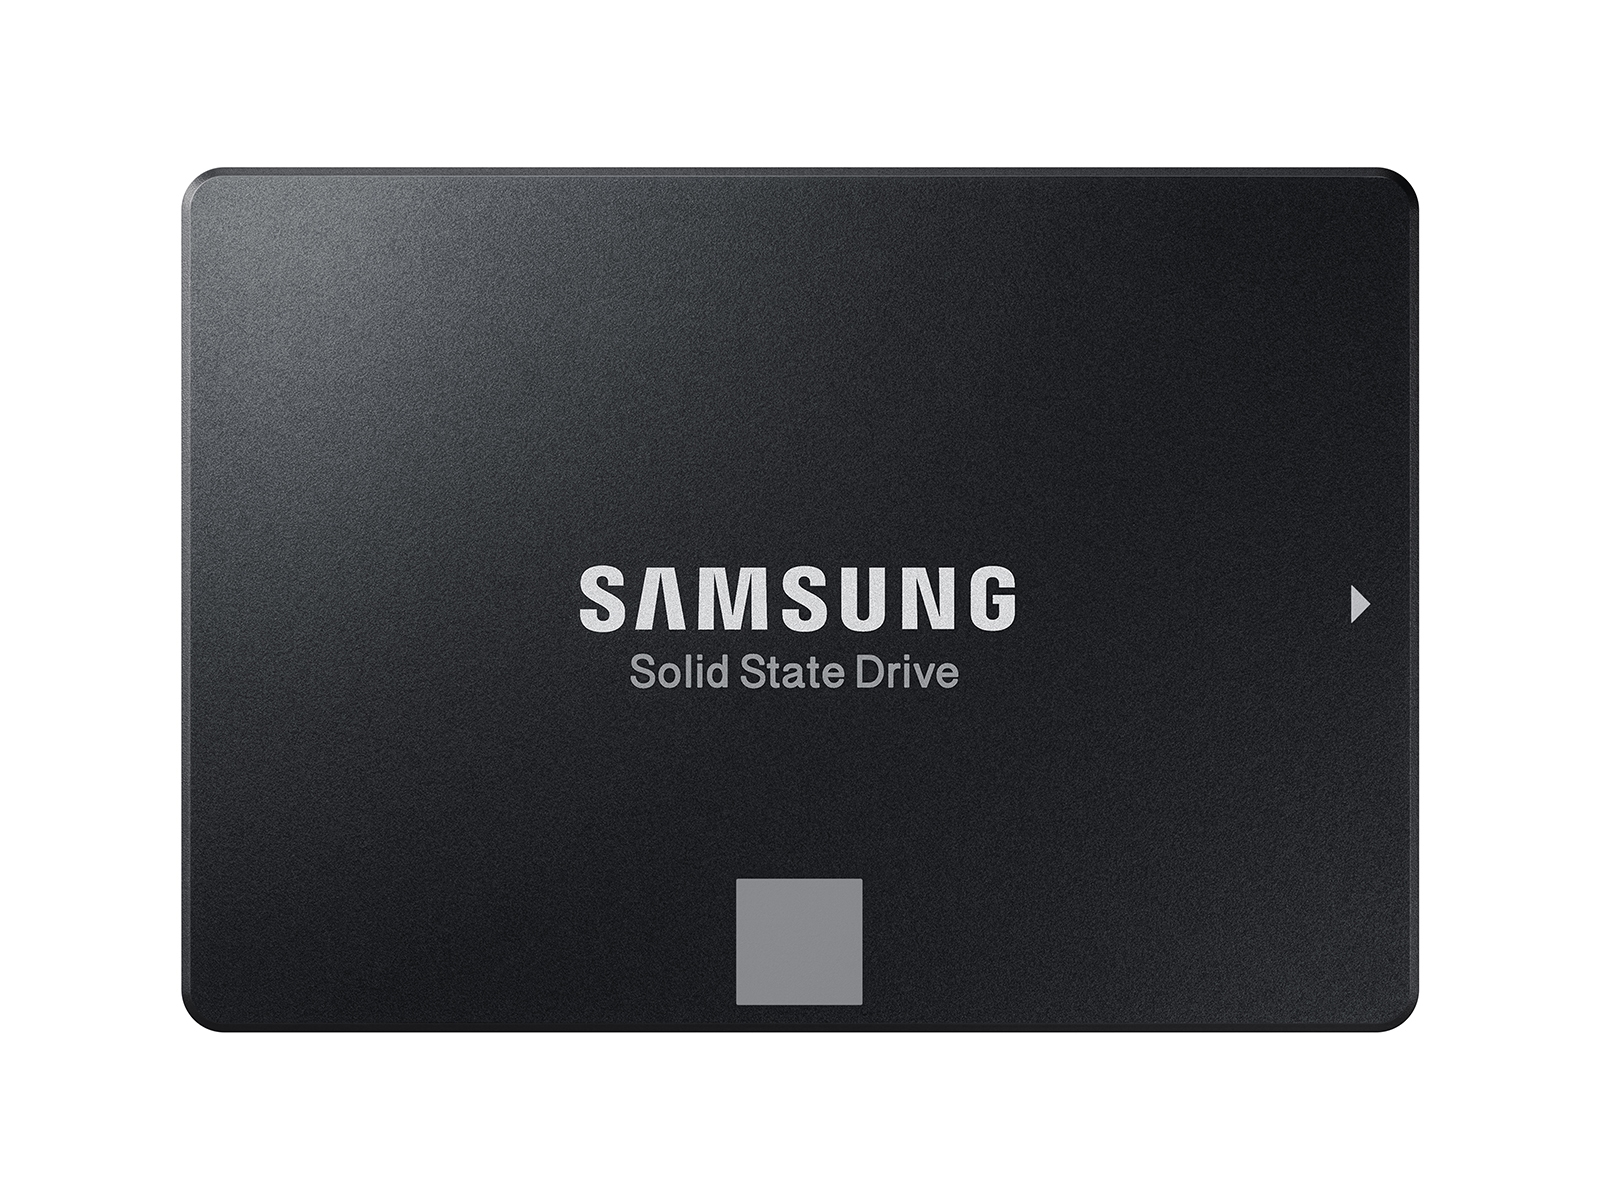 Snart serie fumle SSD 860 EVO 2.5" SATA III 500GB Memory & Storage - MZ-76E500B/AM | Samsung  US